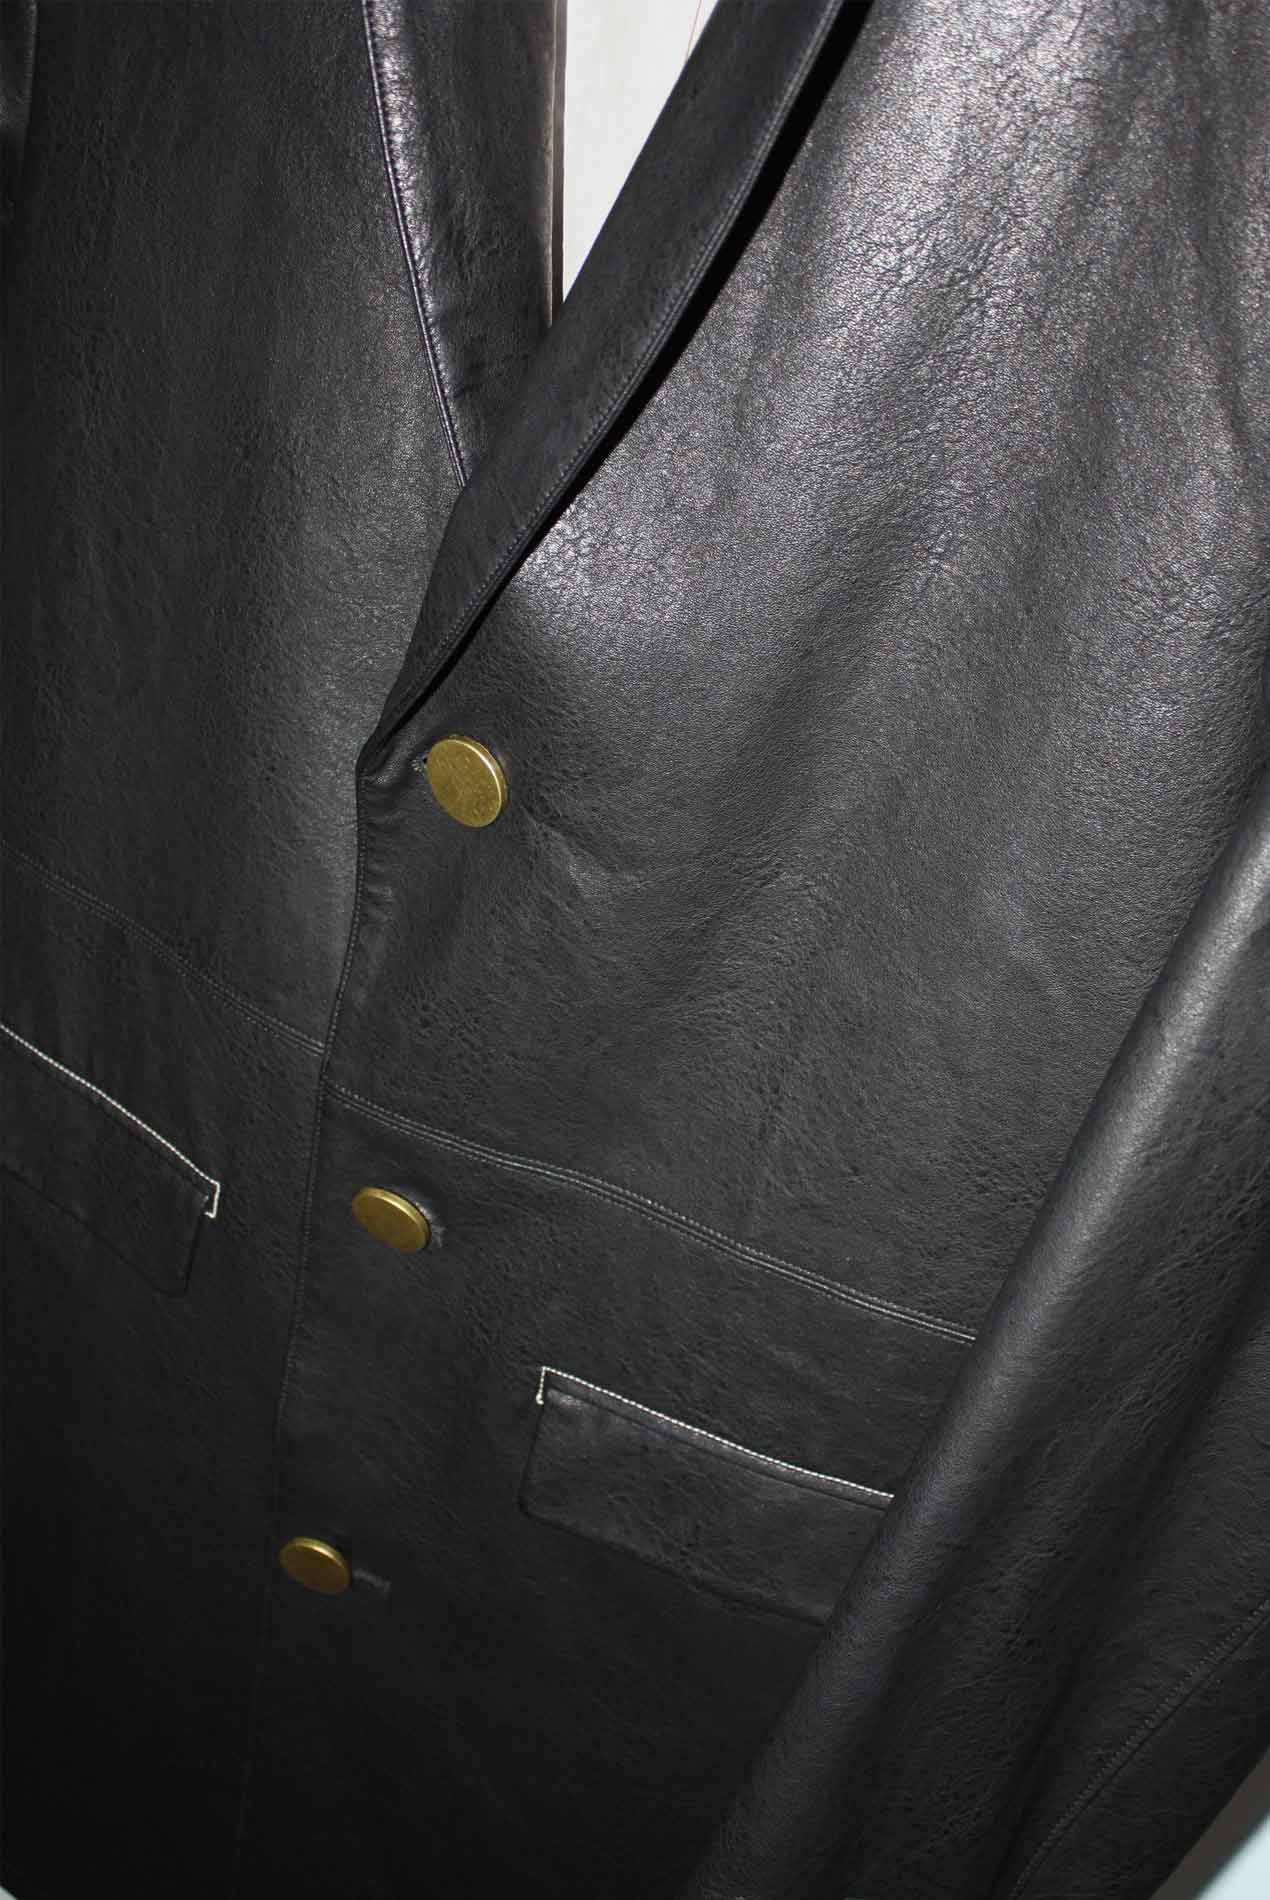 Mule Leather Coat Vintage Black